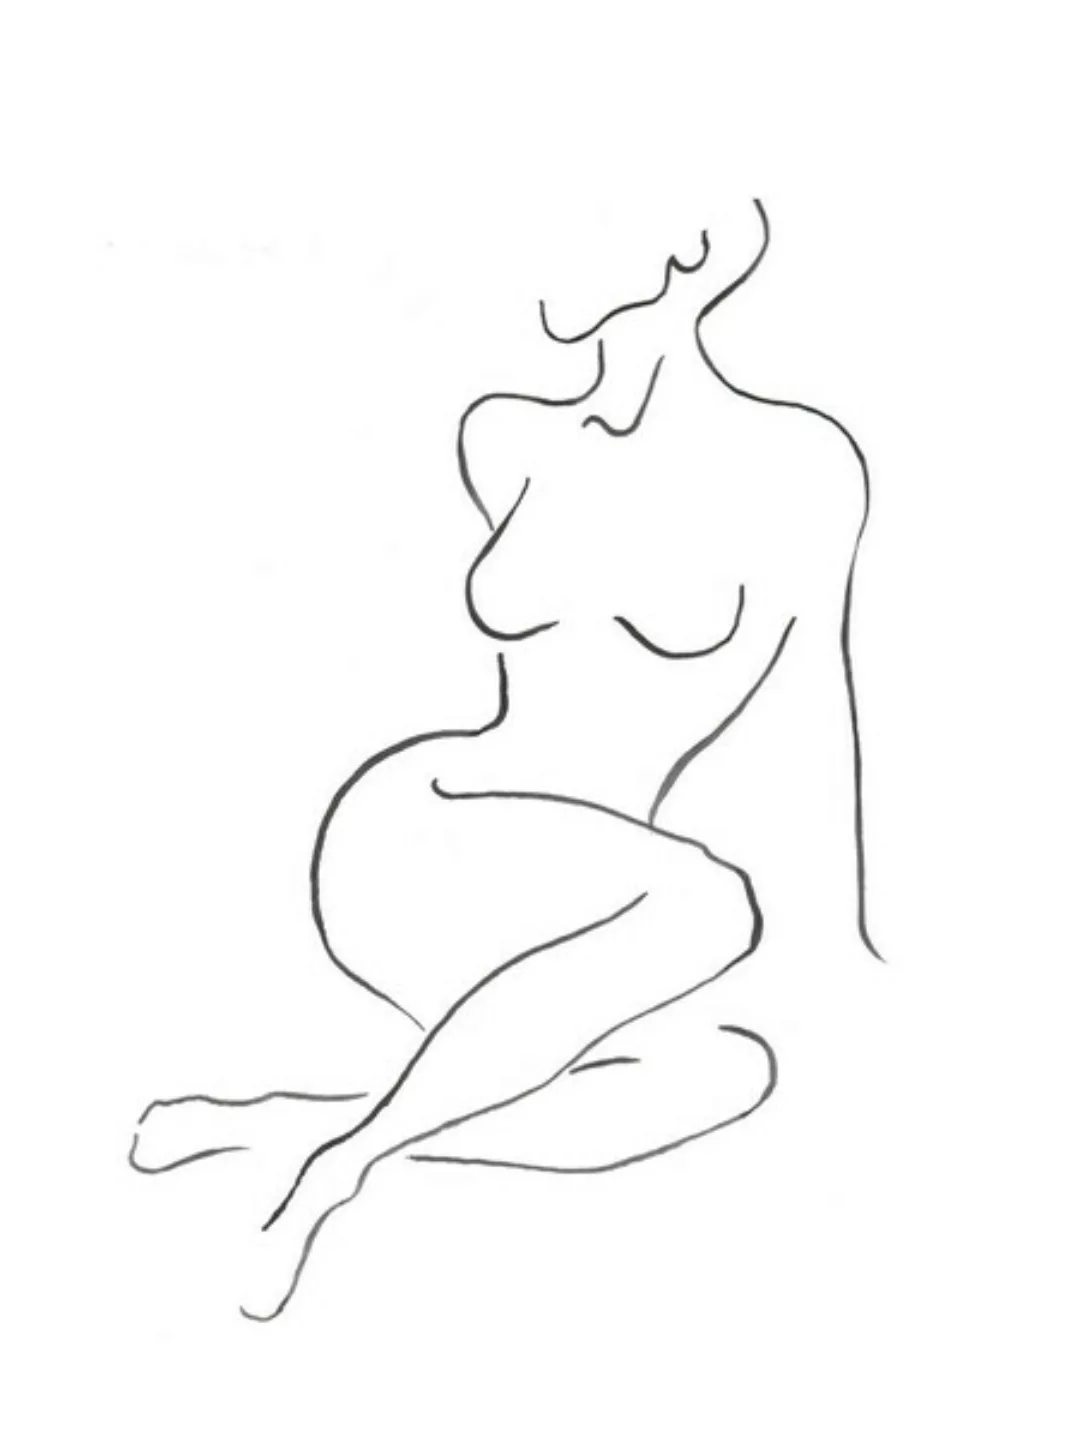 Poster / Leinwandbild - Mantika Minimal Nude günstig online kaufen